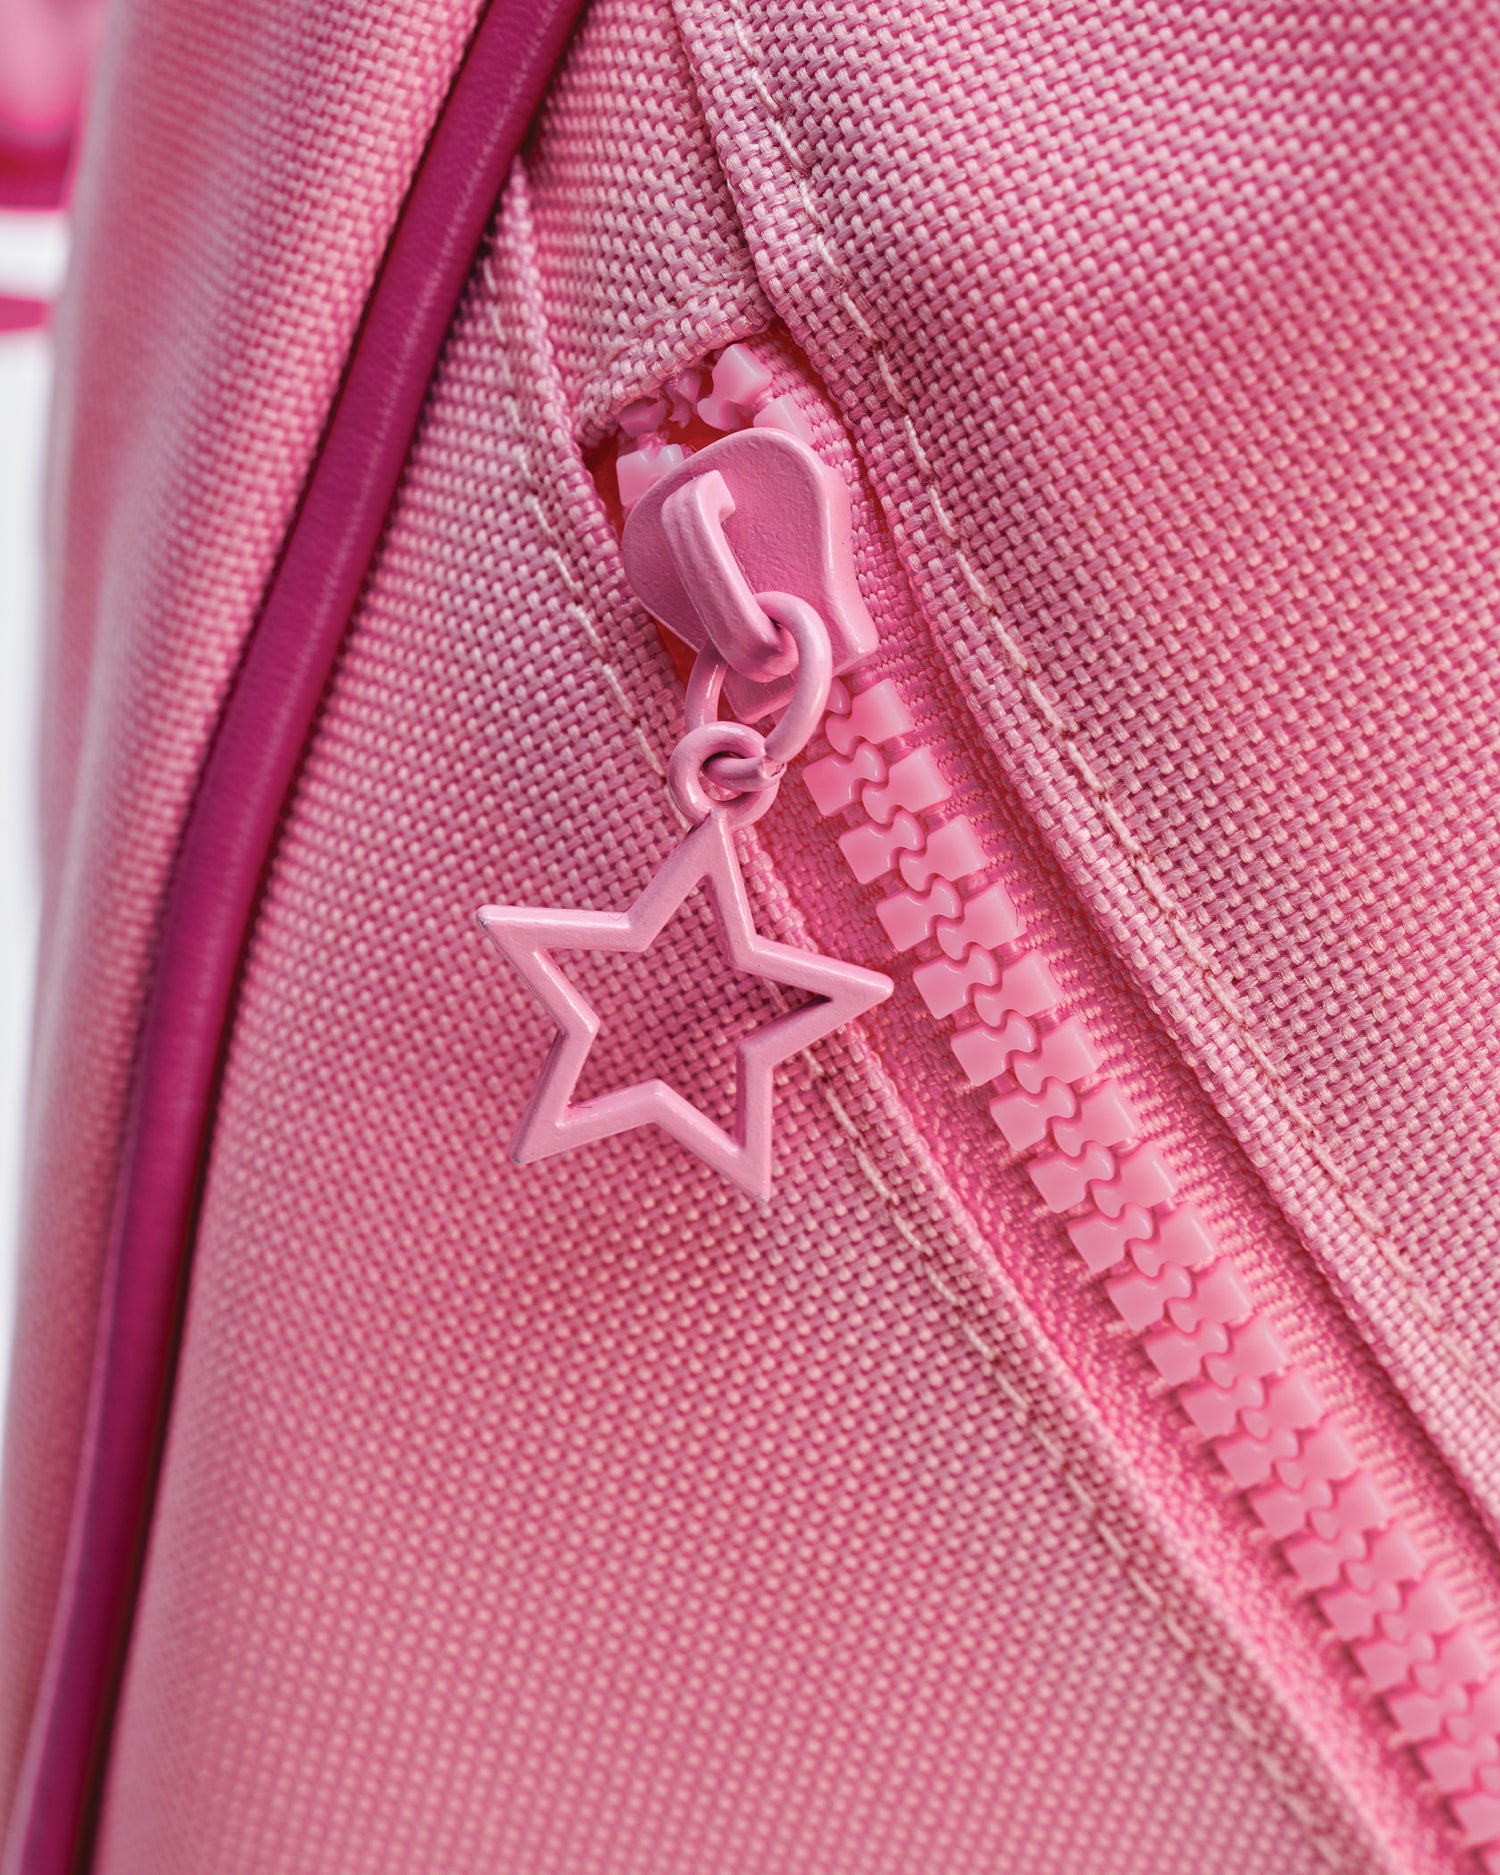 zipper detail of Impala Skate Bag - Pink